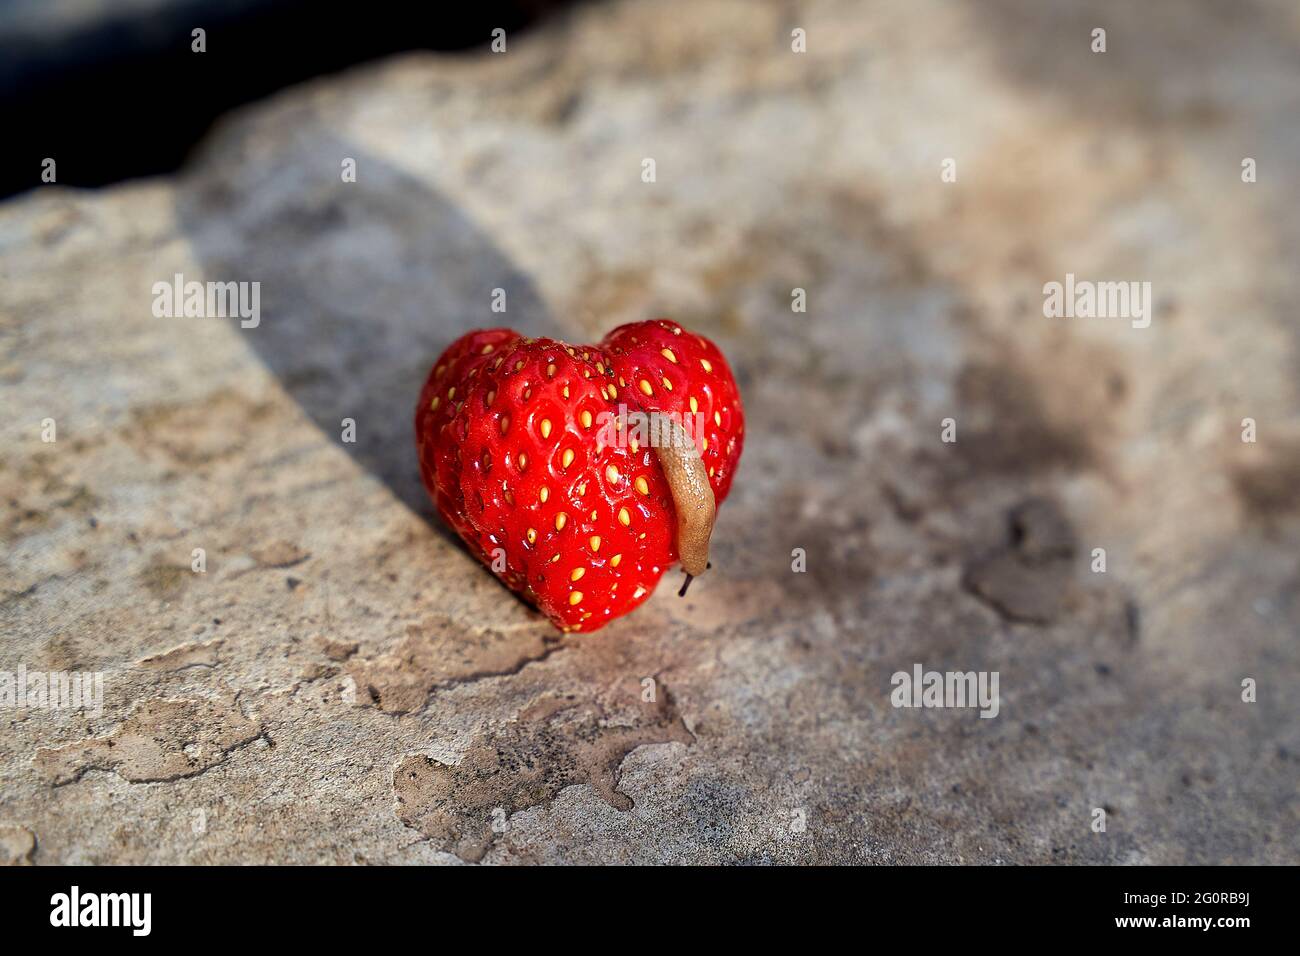 One snail destroy strawberry in summer garden as pest illustration. Big brown slug or derocera eat plants Stock Photo